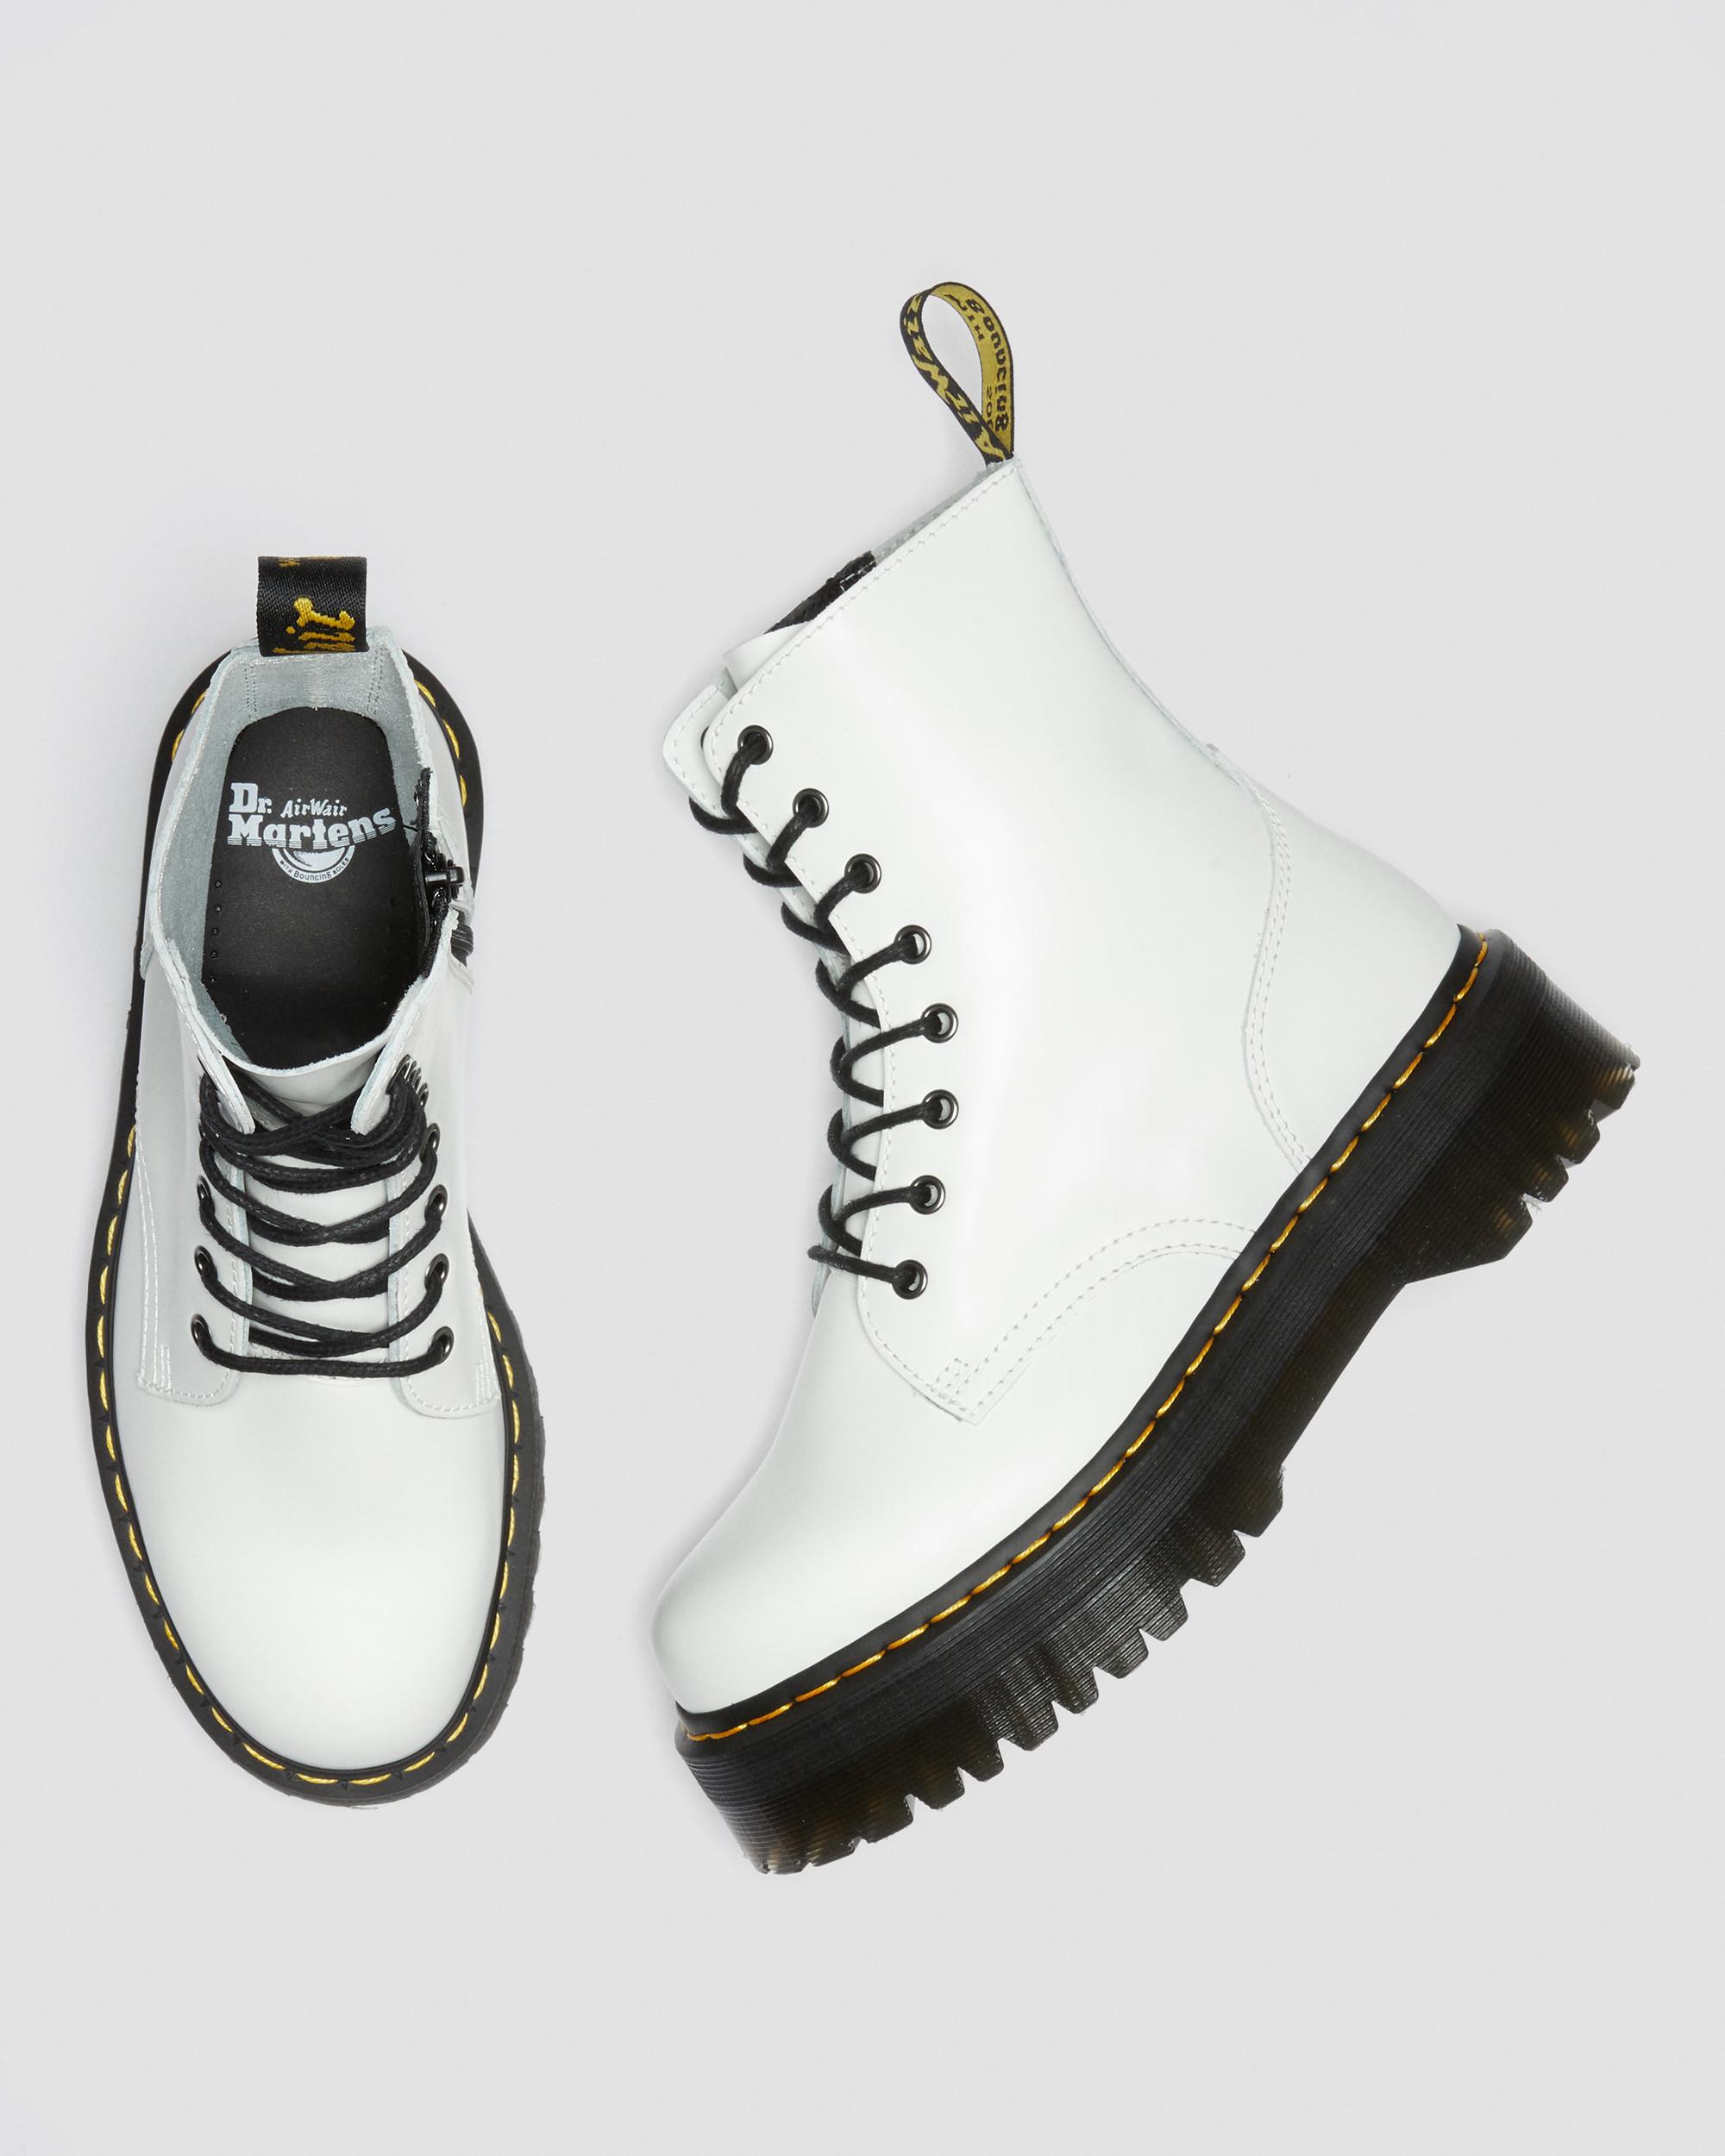 Jadon Smooth Leather Platform Boots in White